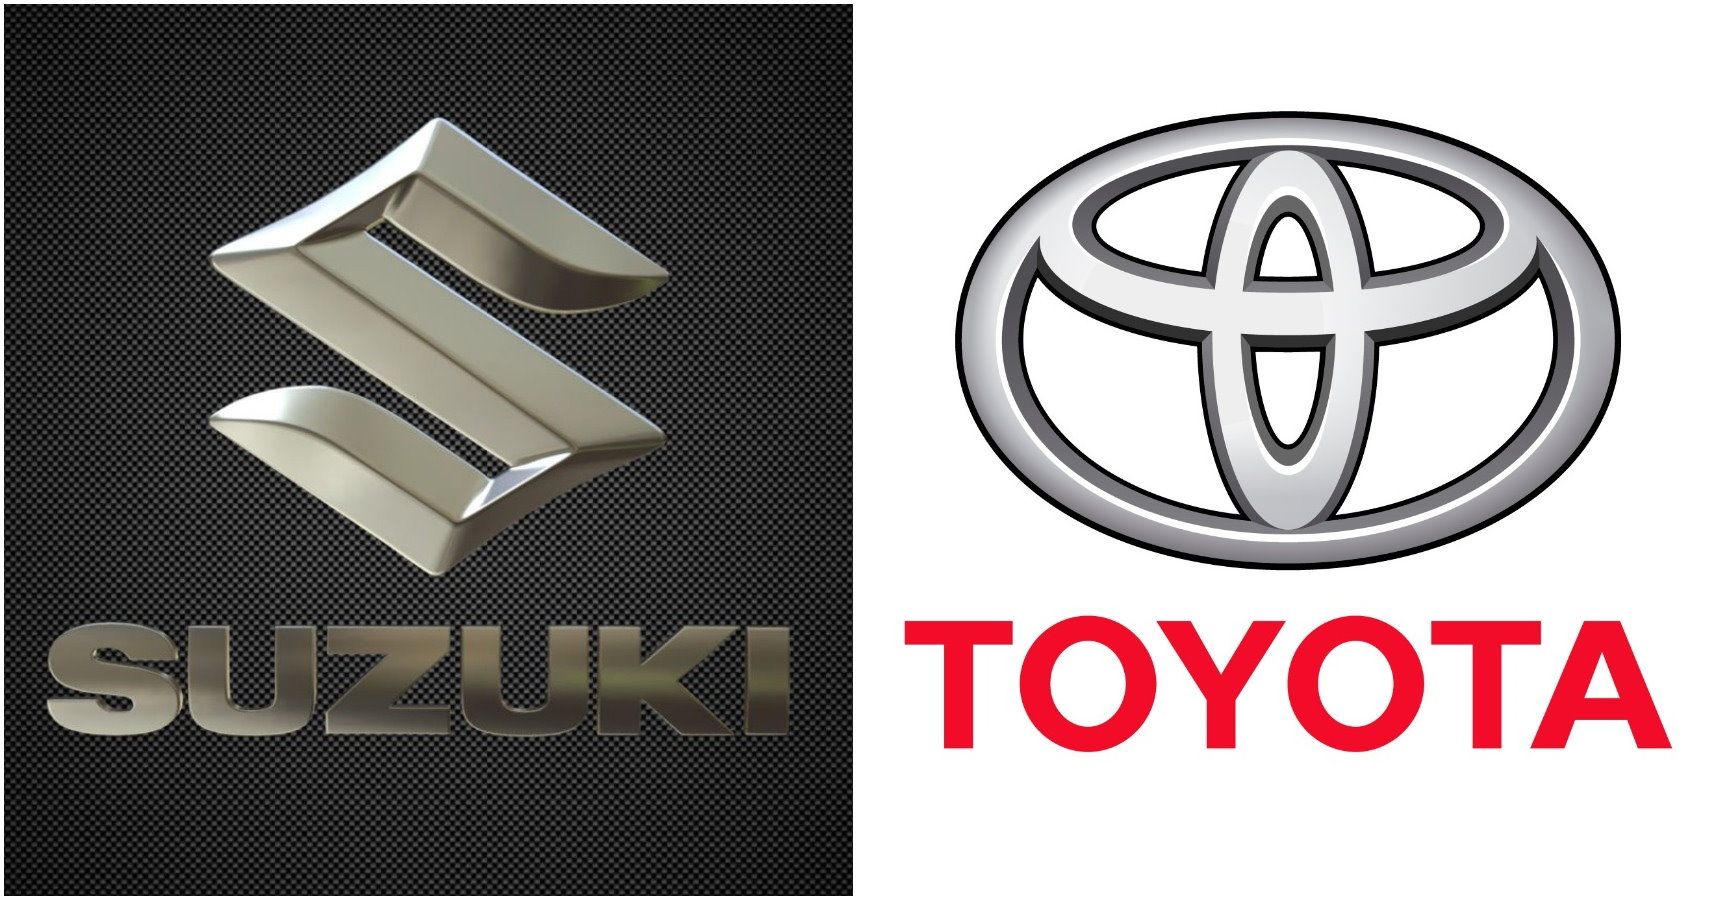 Suzuki Toyota Logos